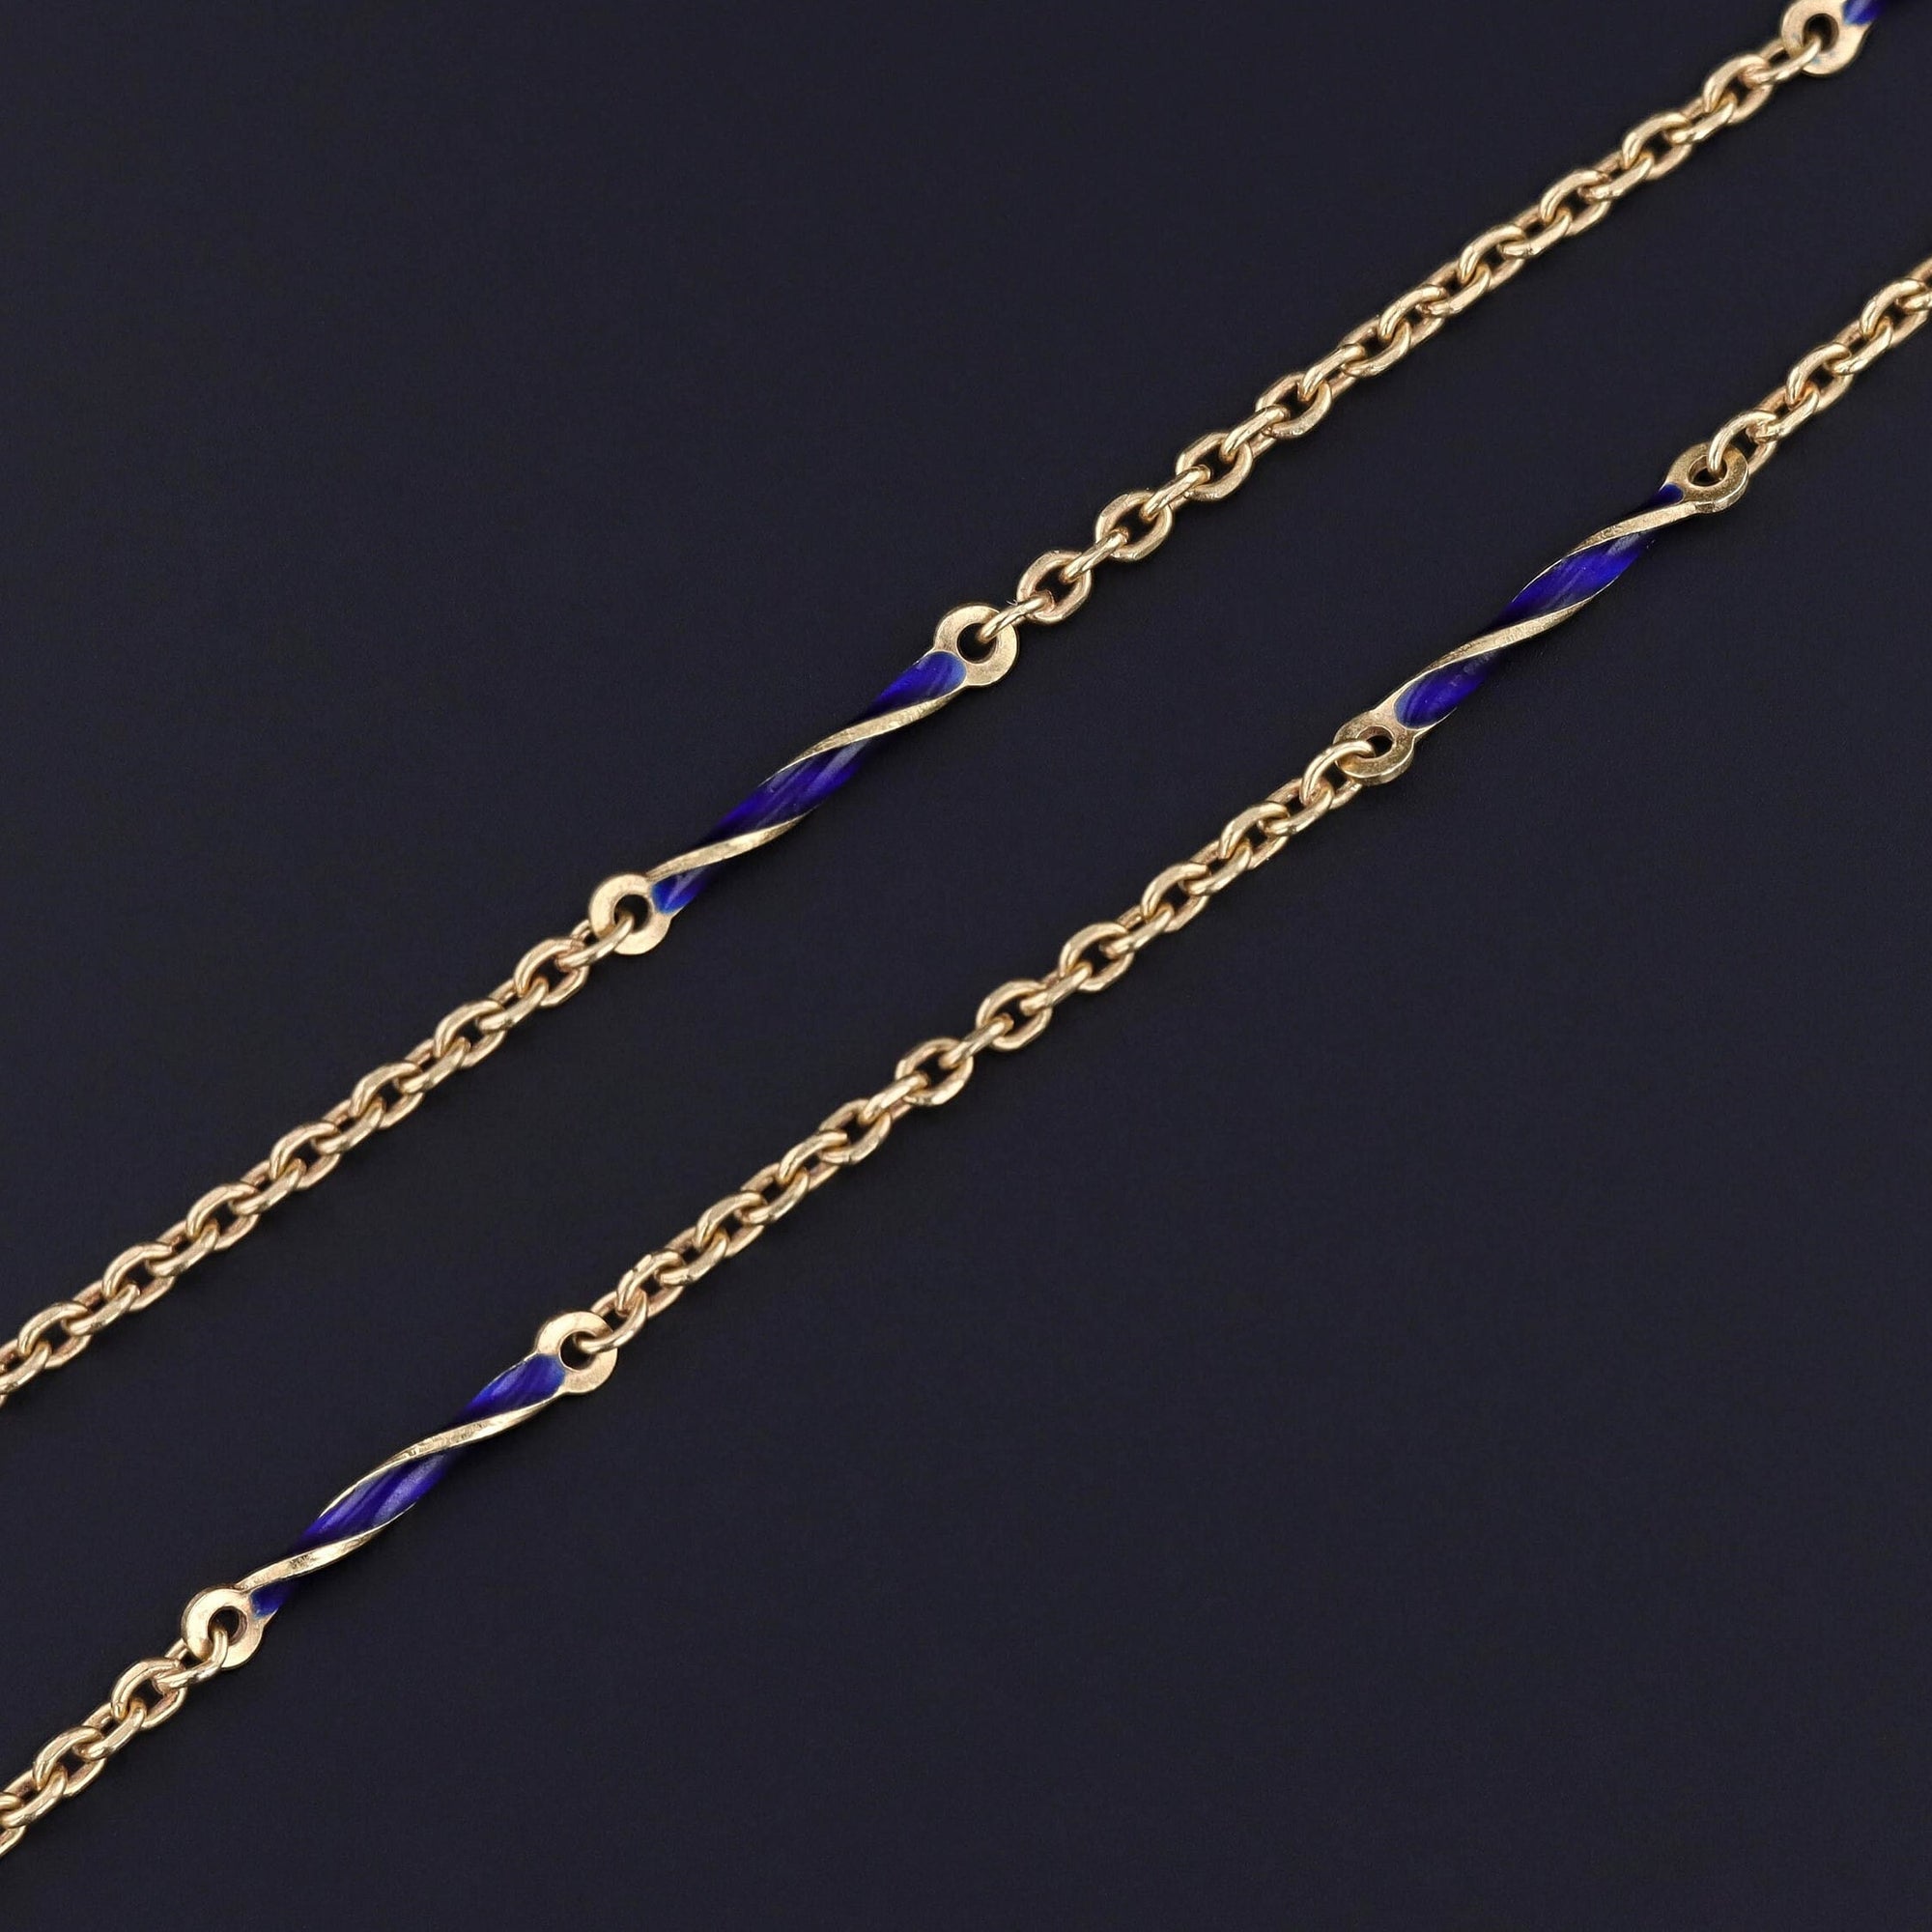 Vintage Blue Enamel Chain of 18k Gold